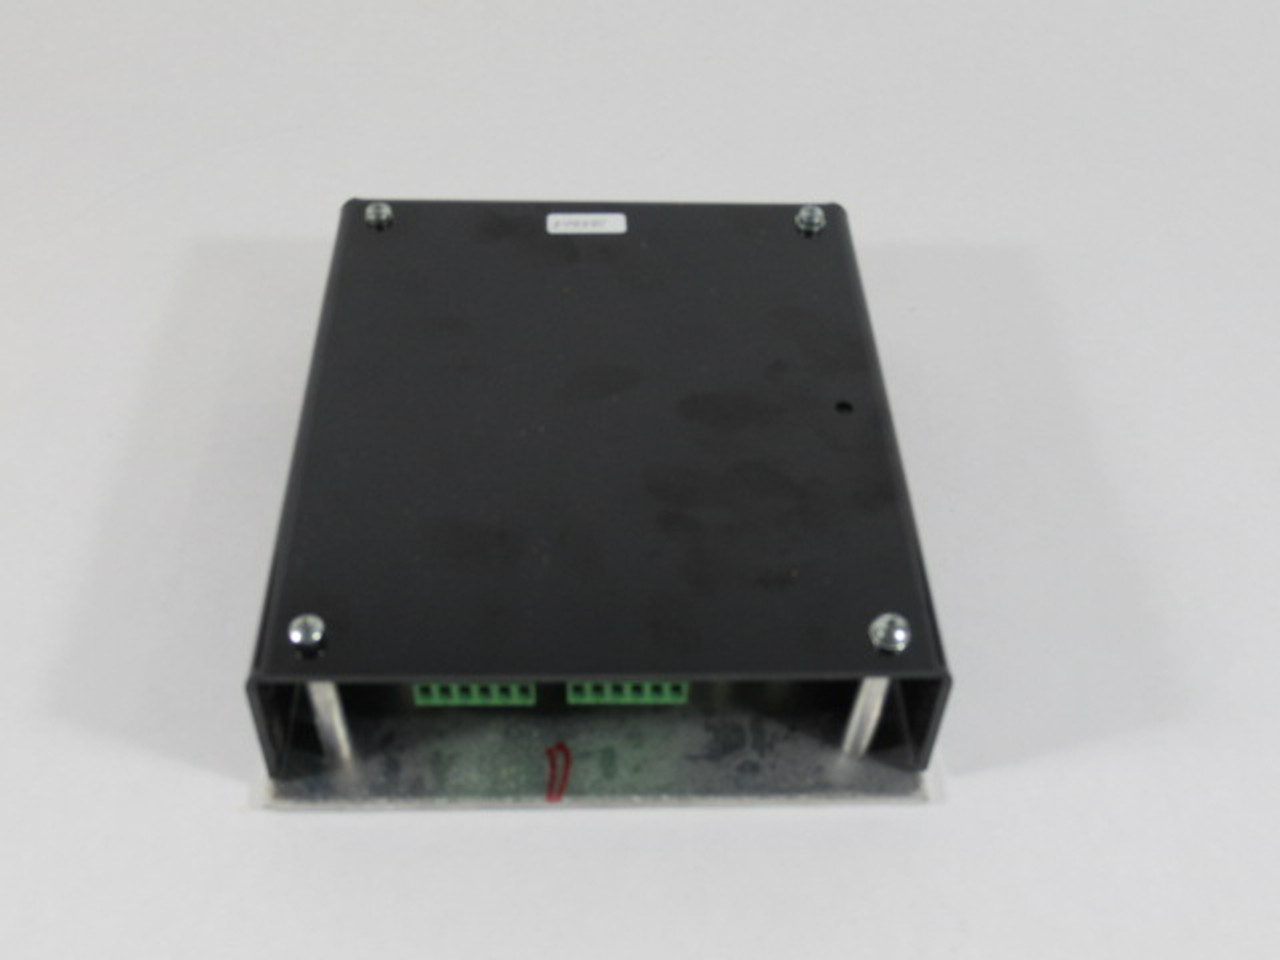 Motortronics DSS1000-COM Digital Controller Unit USED